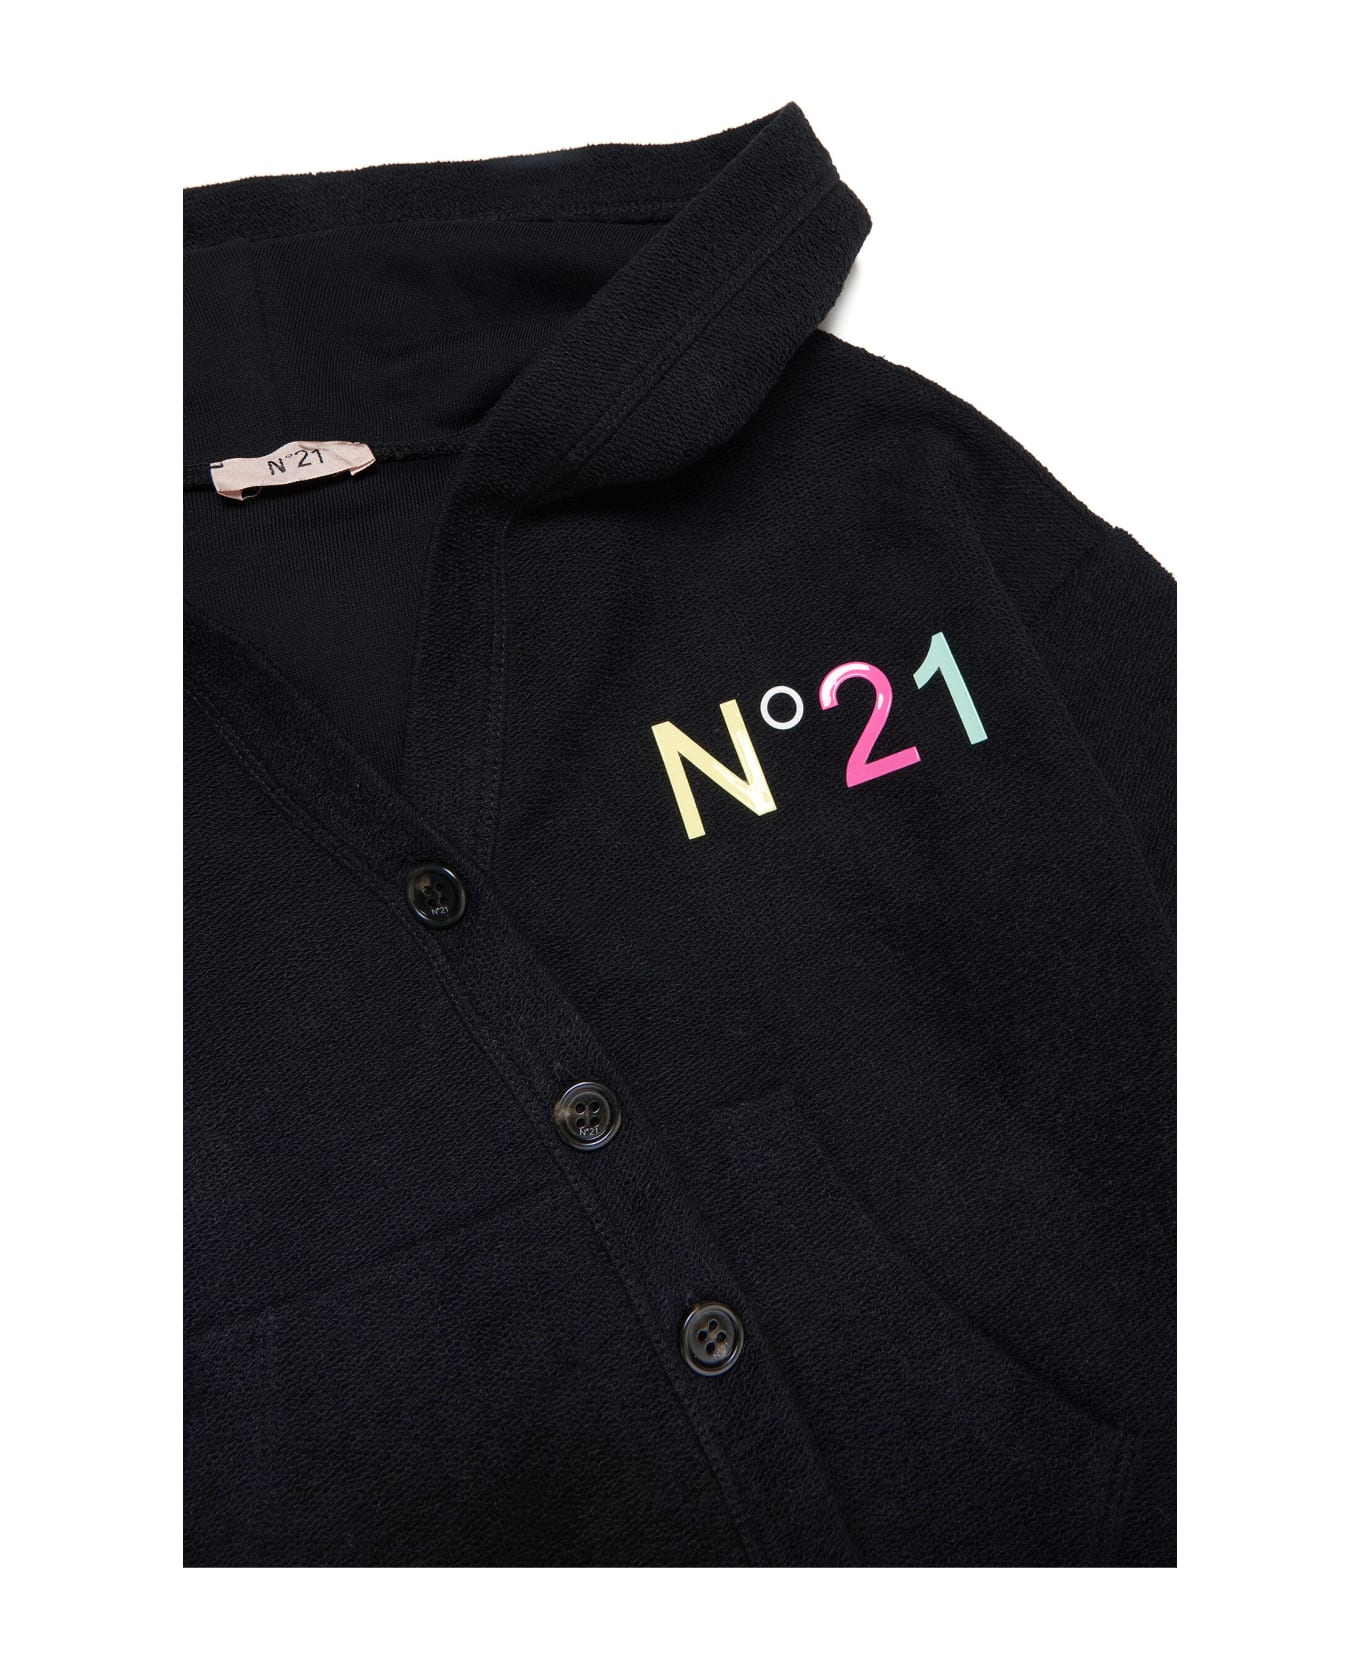 N.21 N21s162f Sweat-shirt N°21 La Bottega Di Giorgia Baby Girl Clothing With Hood, Buttons And Multicoloured Logo - Black